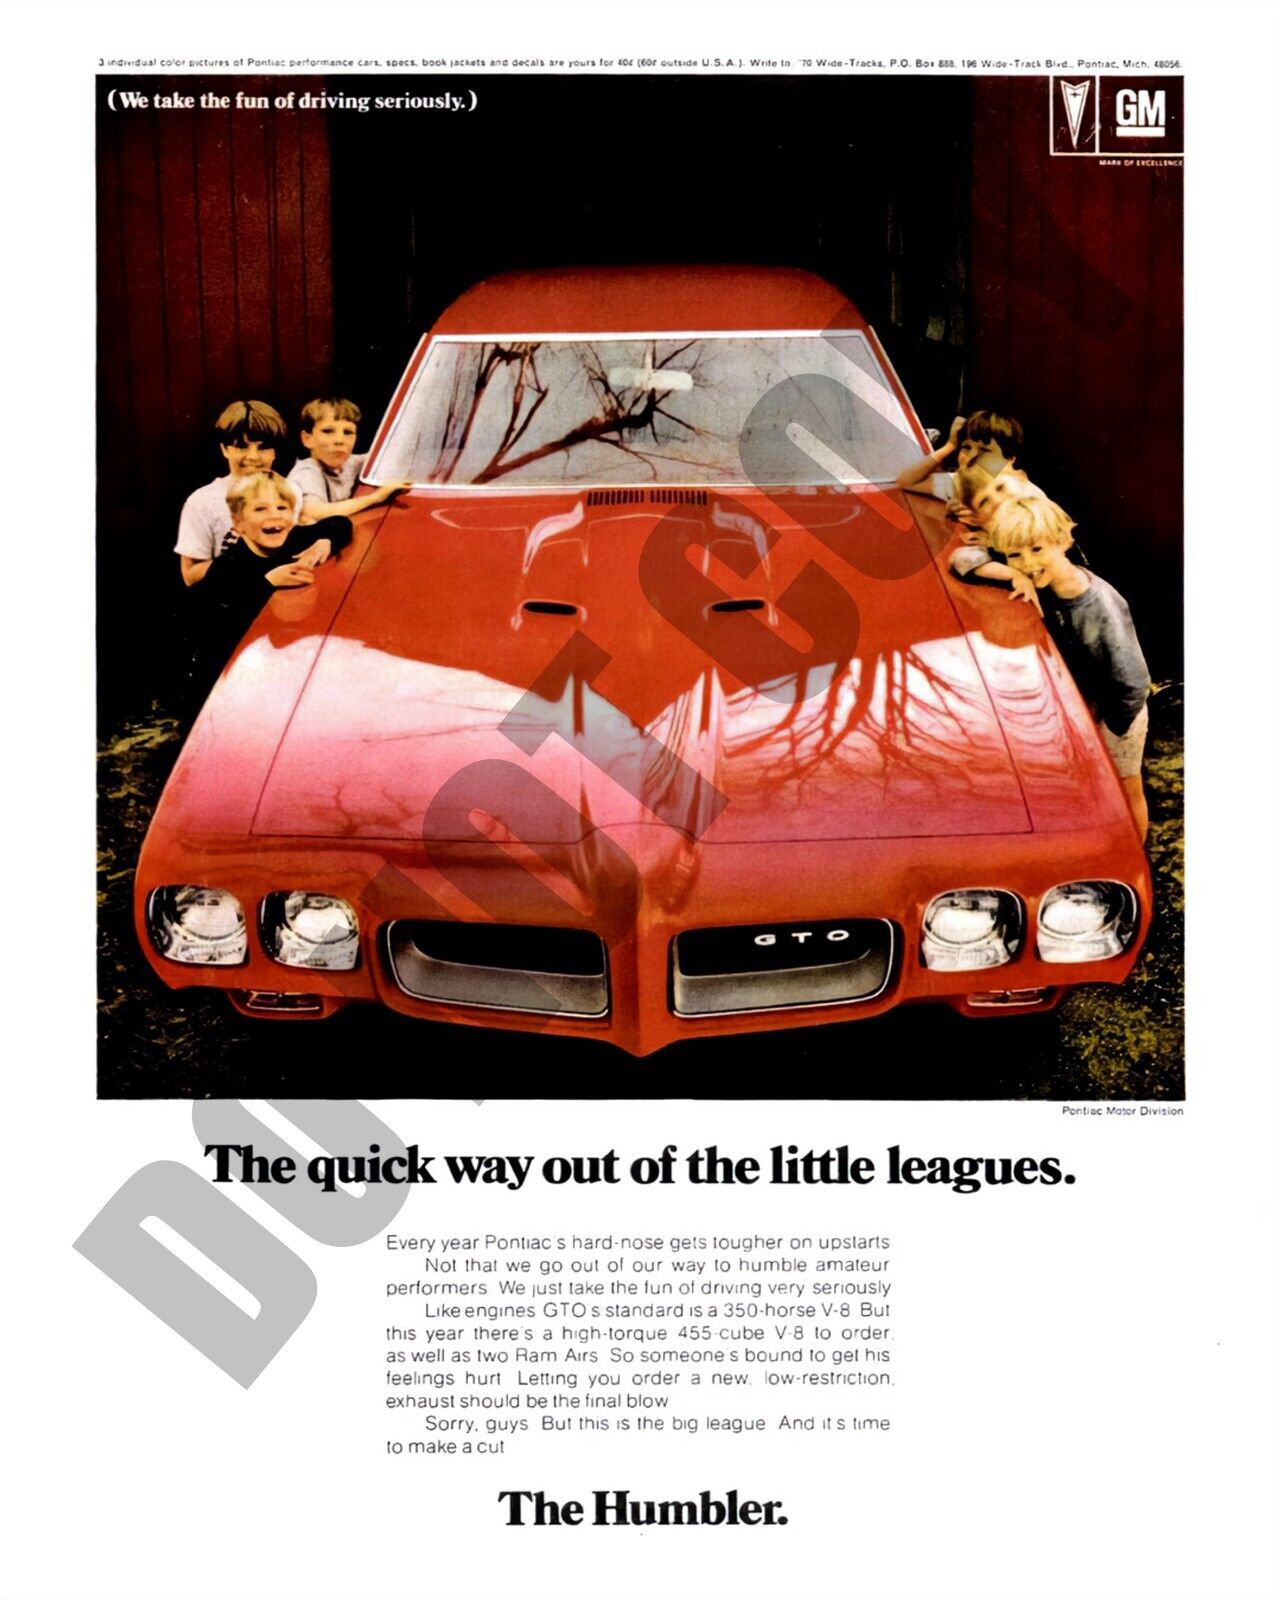 1970 Pontiac GTO The Humbler Magazine Promo Car Auto Ad 8x10 Photo